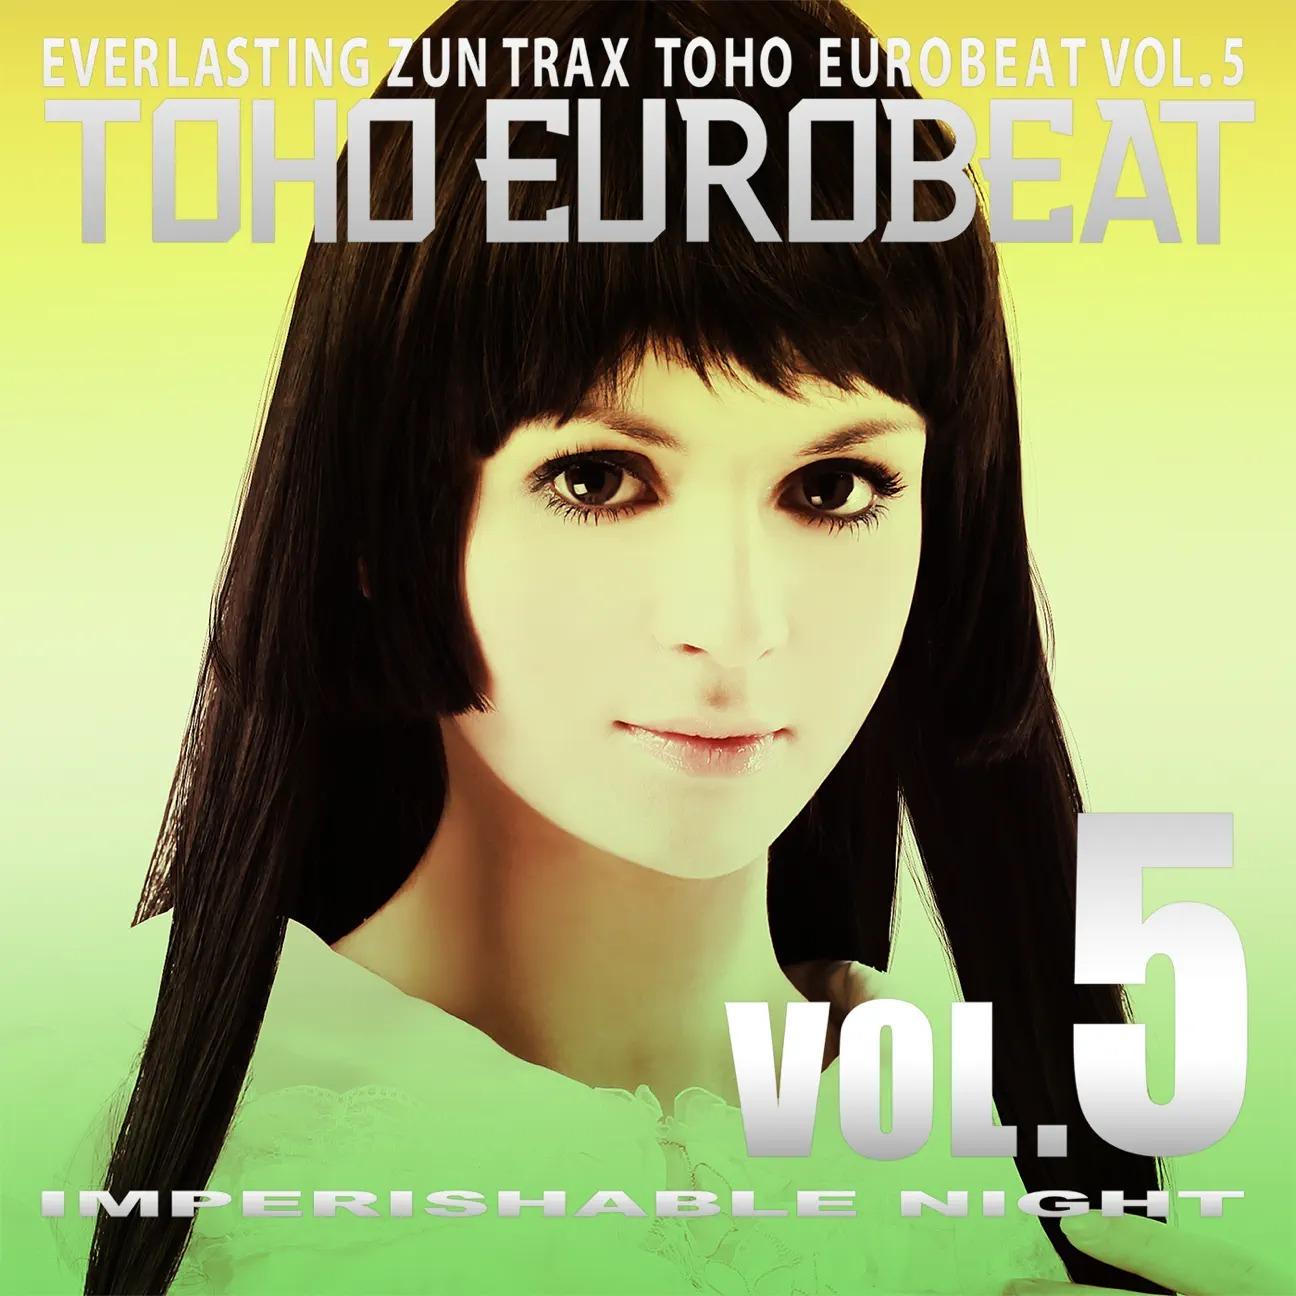 Toho Eurobeat Vol. 5 ~Imperishable Night~